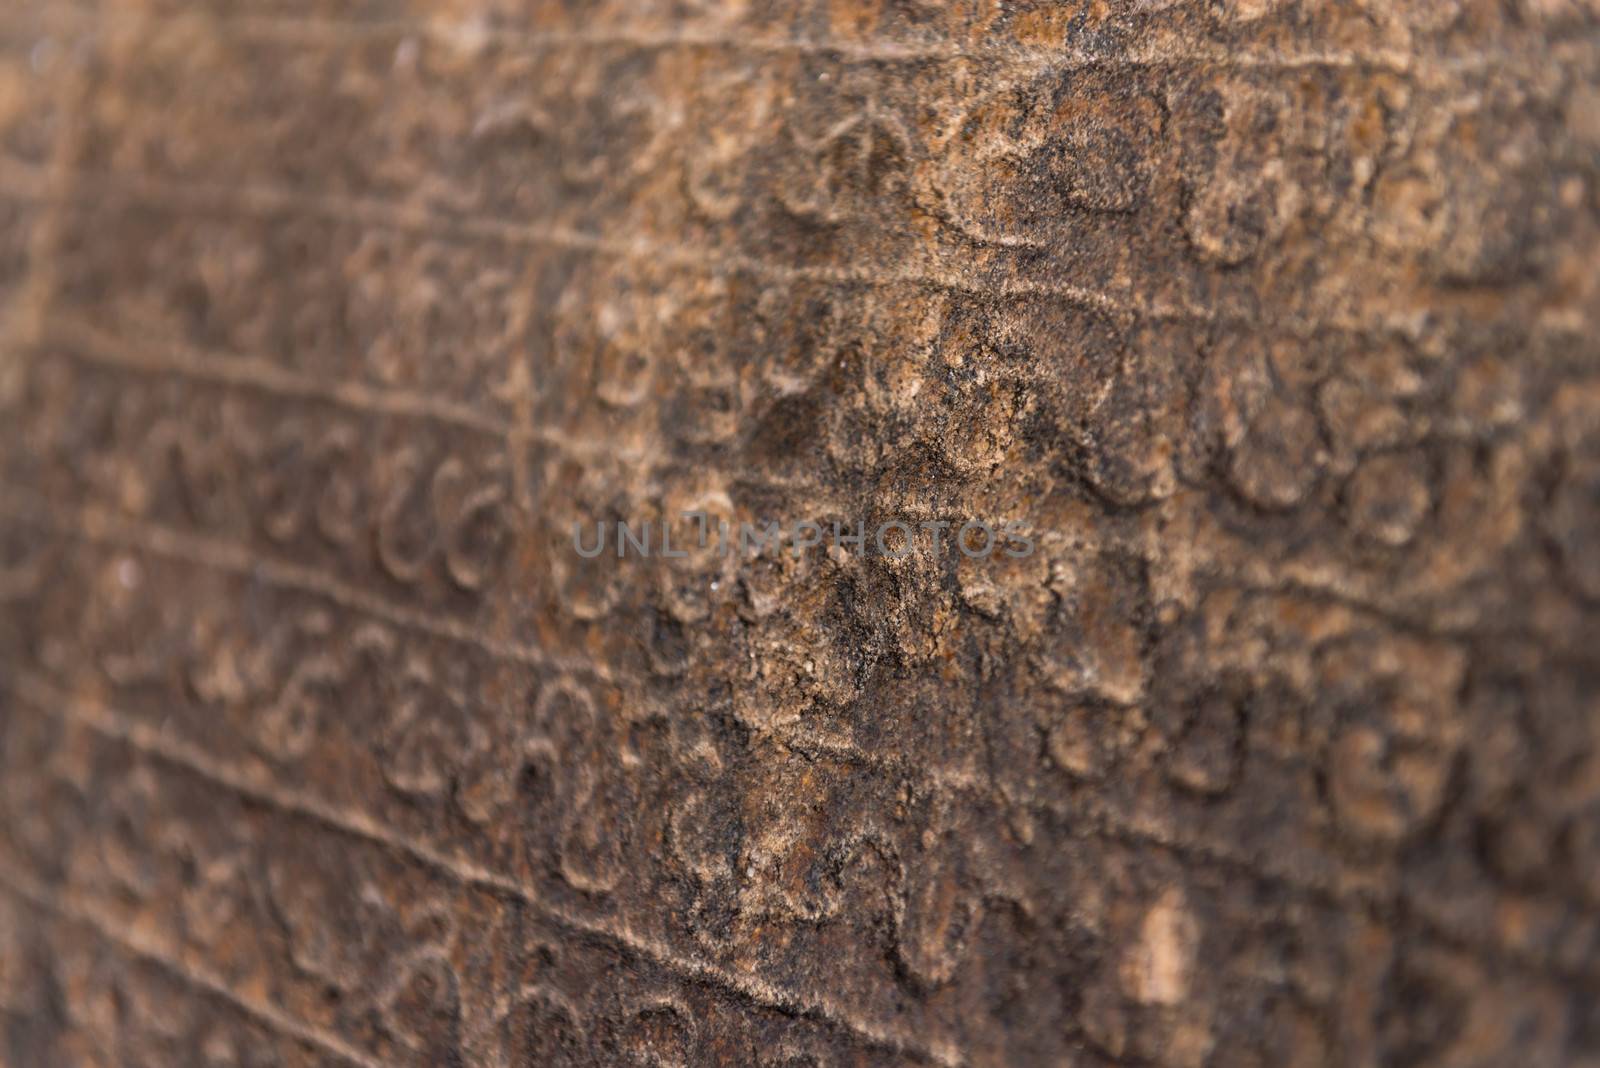 Ancient Sinhalese writing chiseled on stone by iryna_rasko